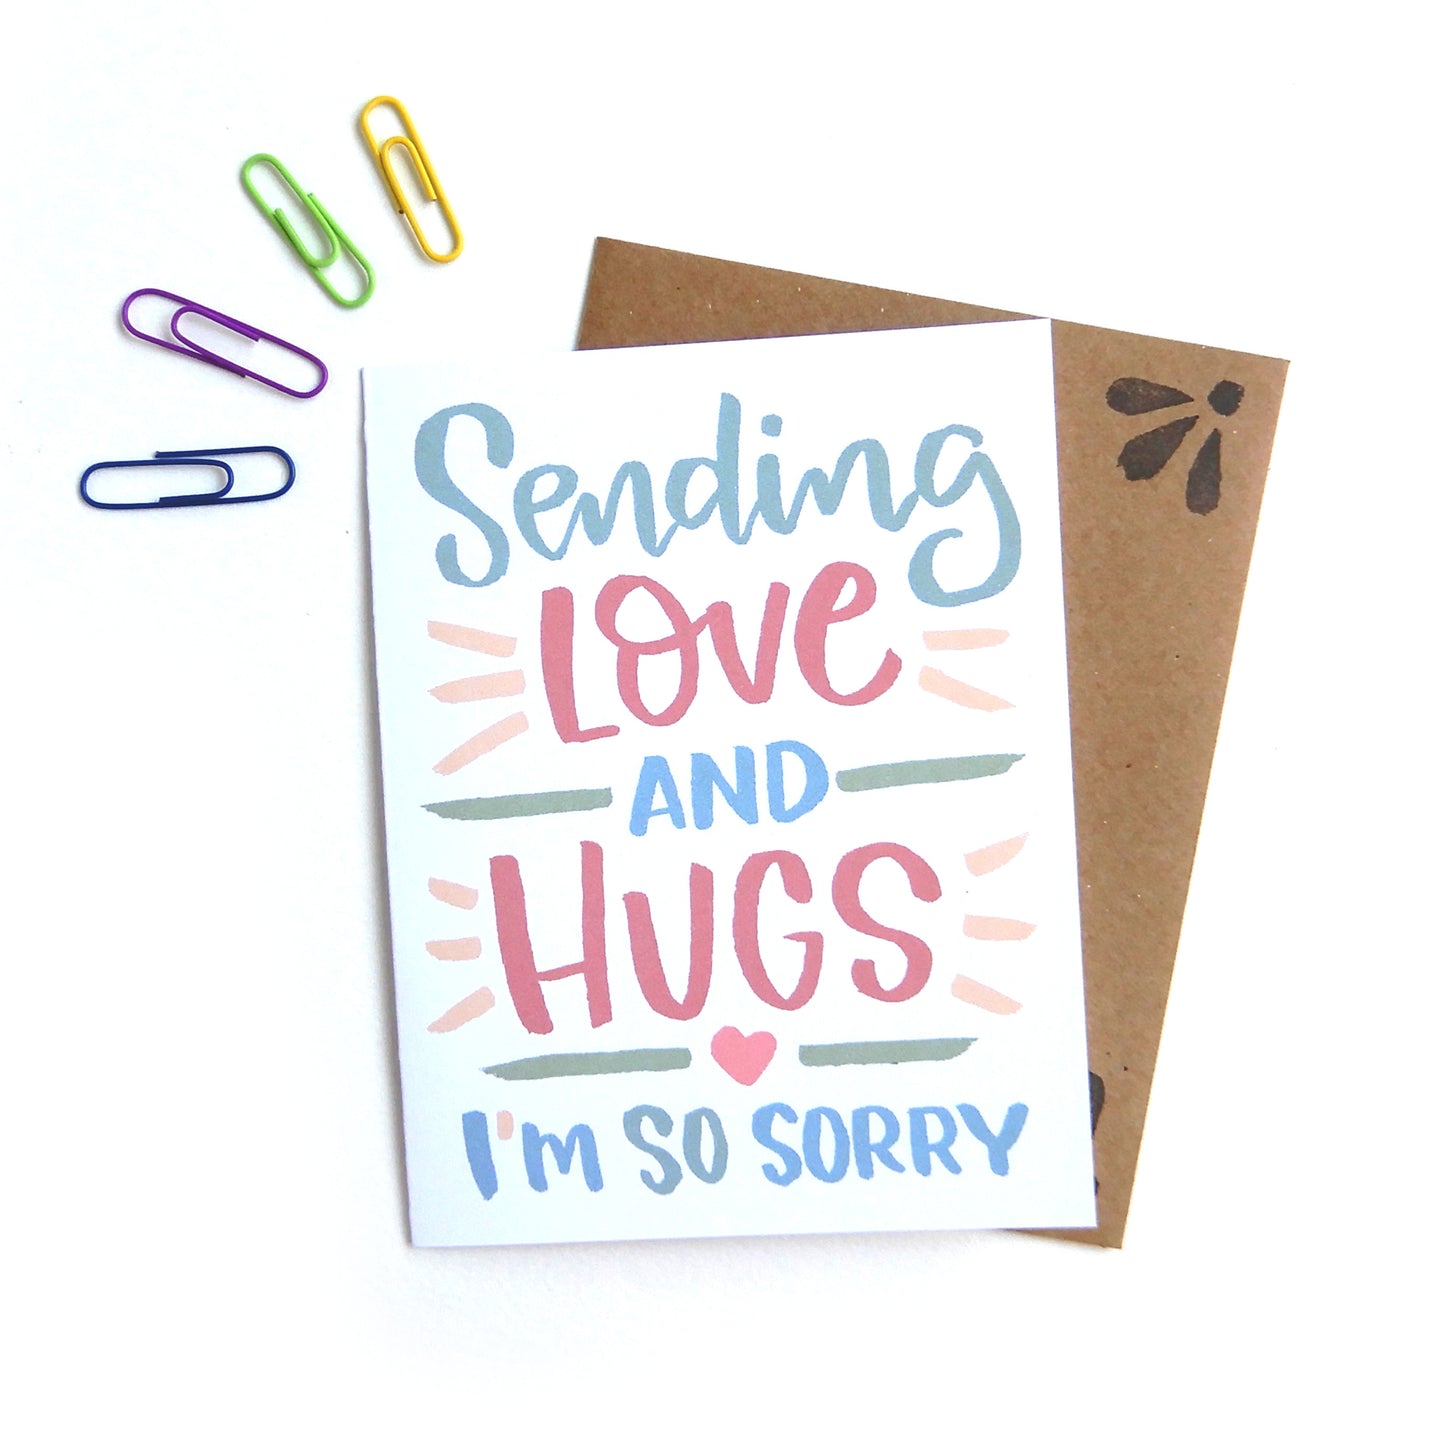 Sending Love and Hugs Card